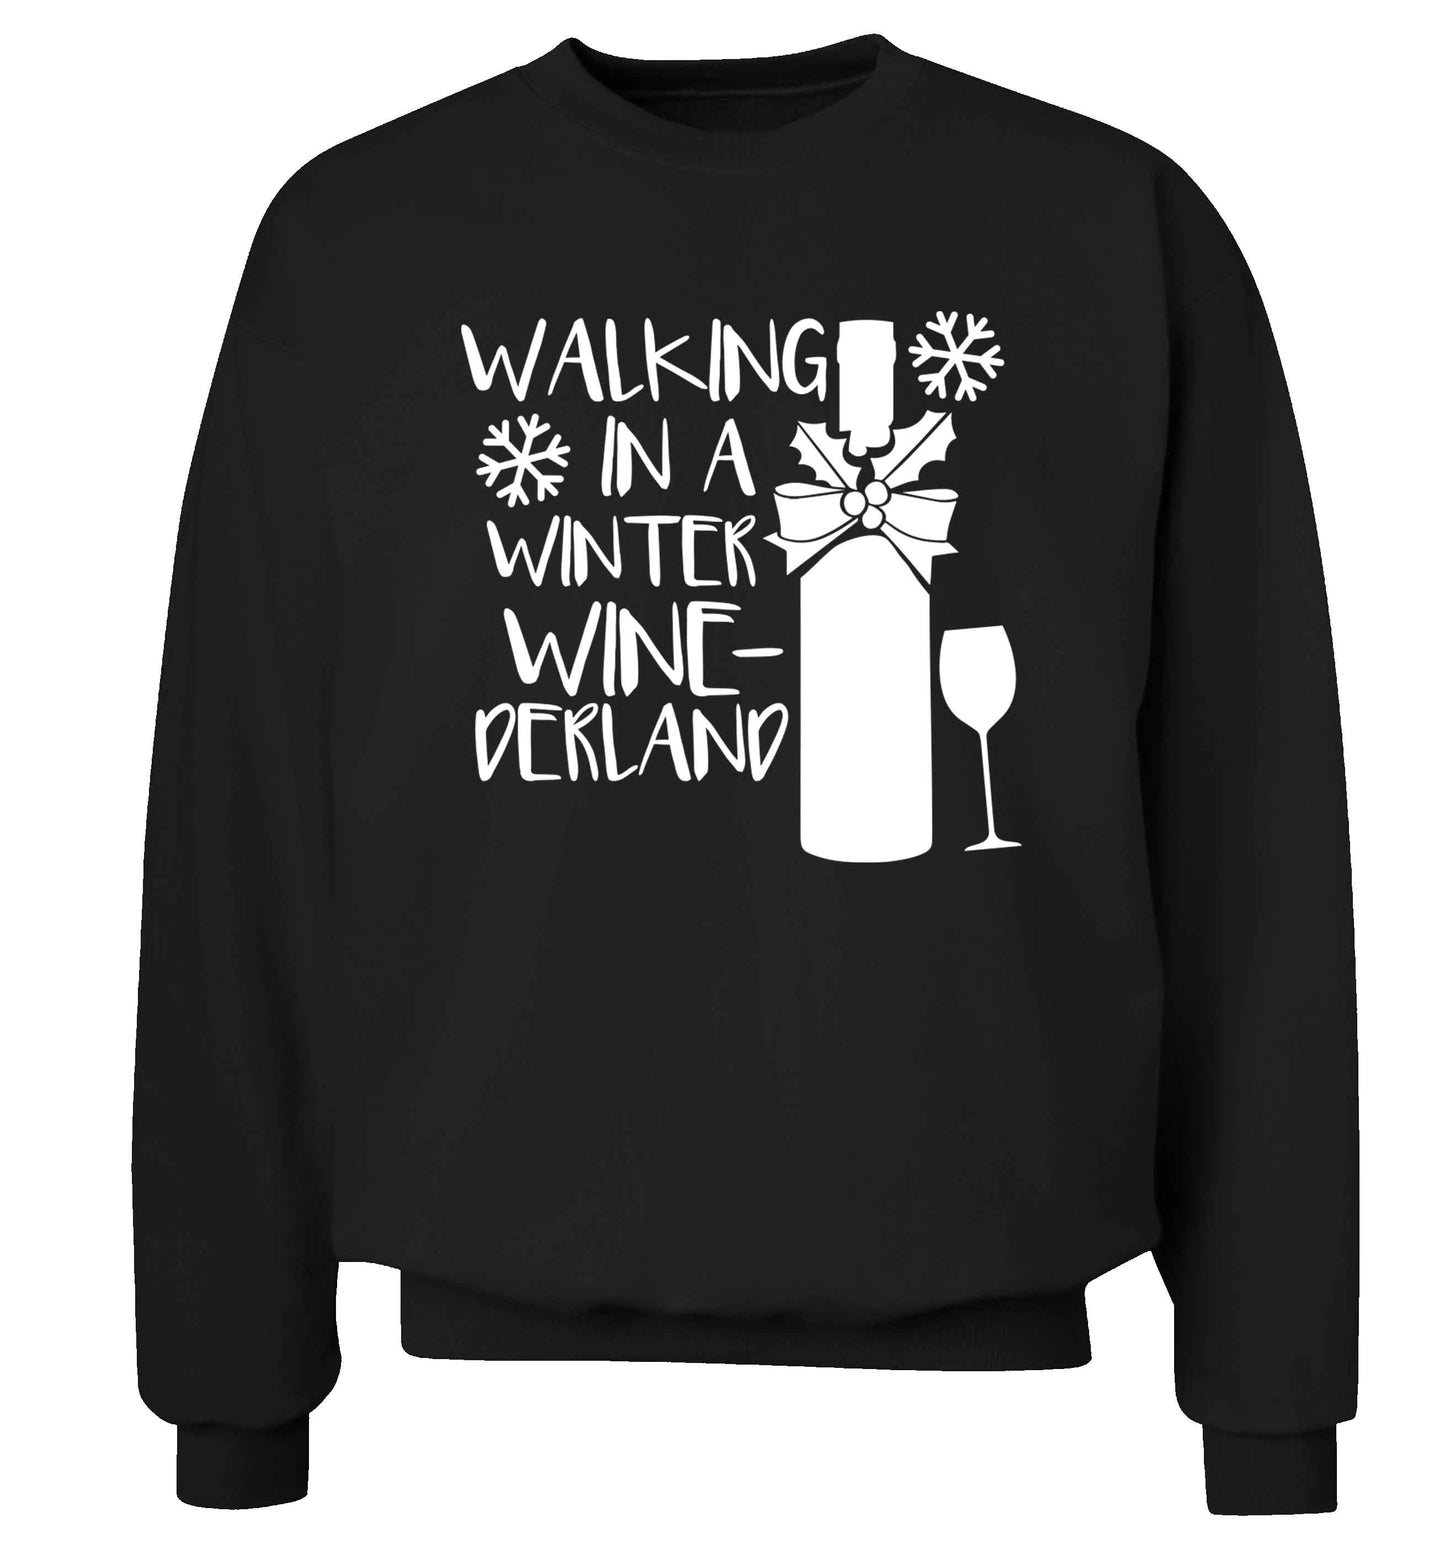 Walking in a wine-derwonderland Adult's unisex black Sweater 2XL